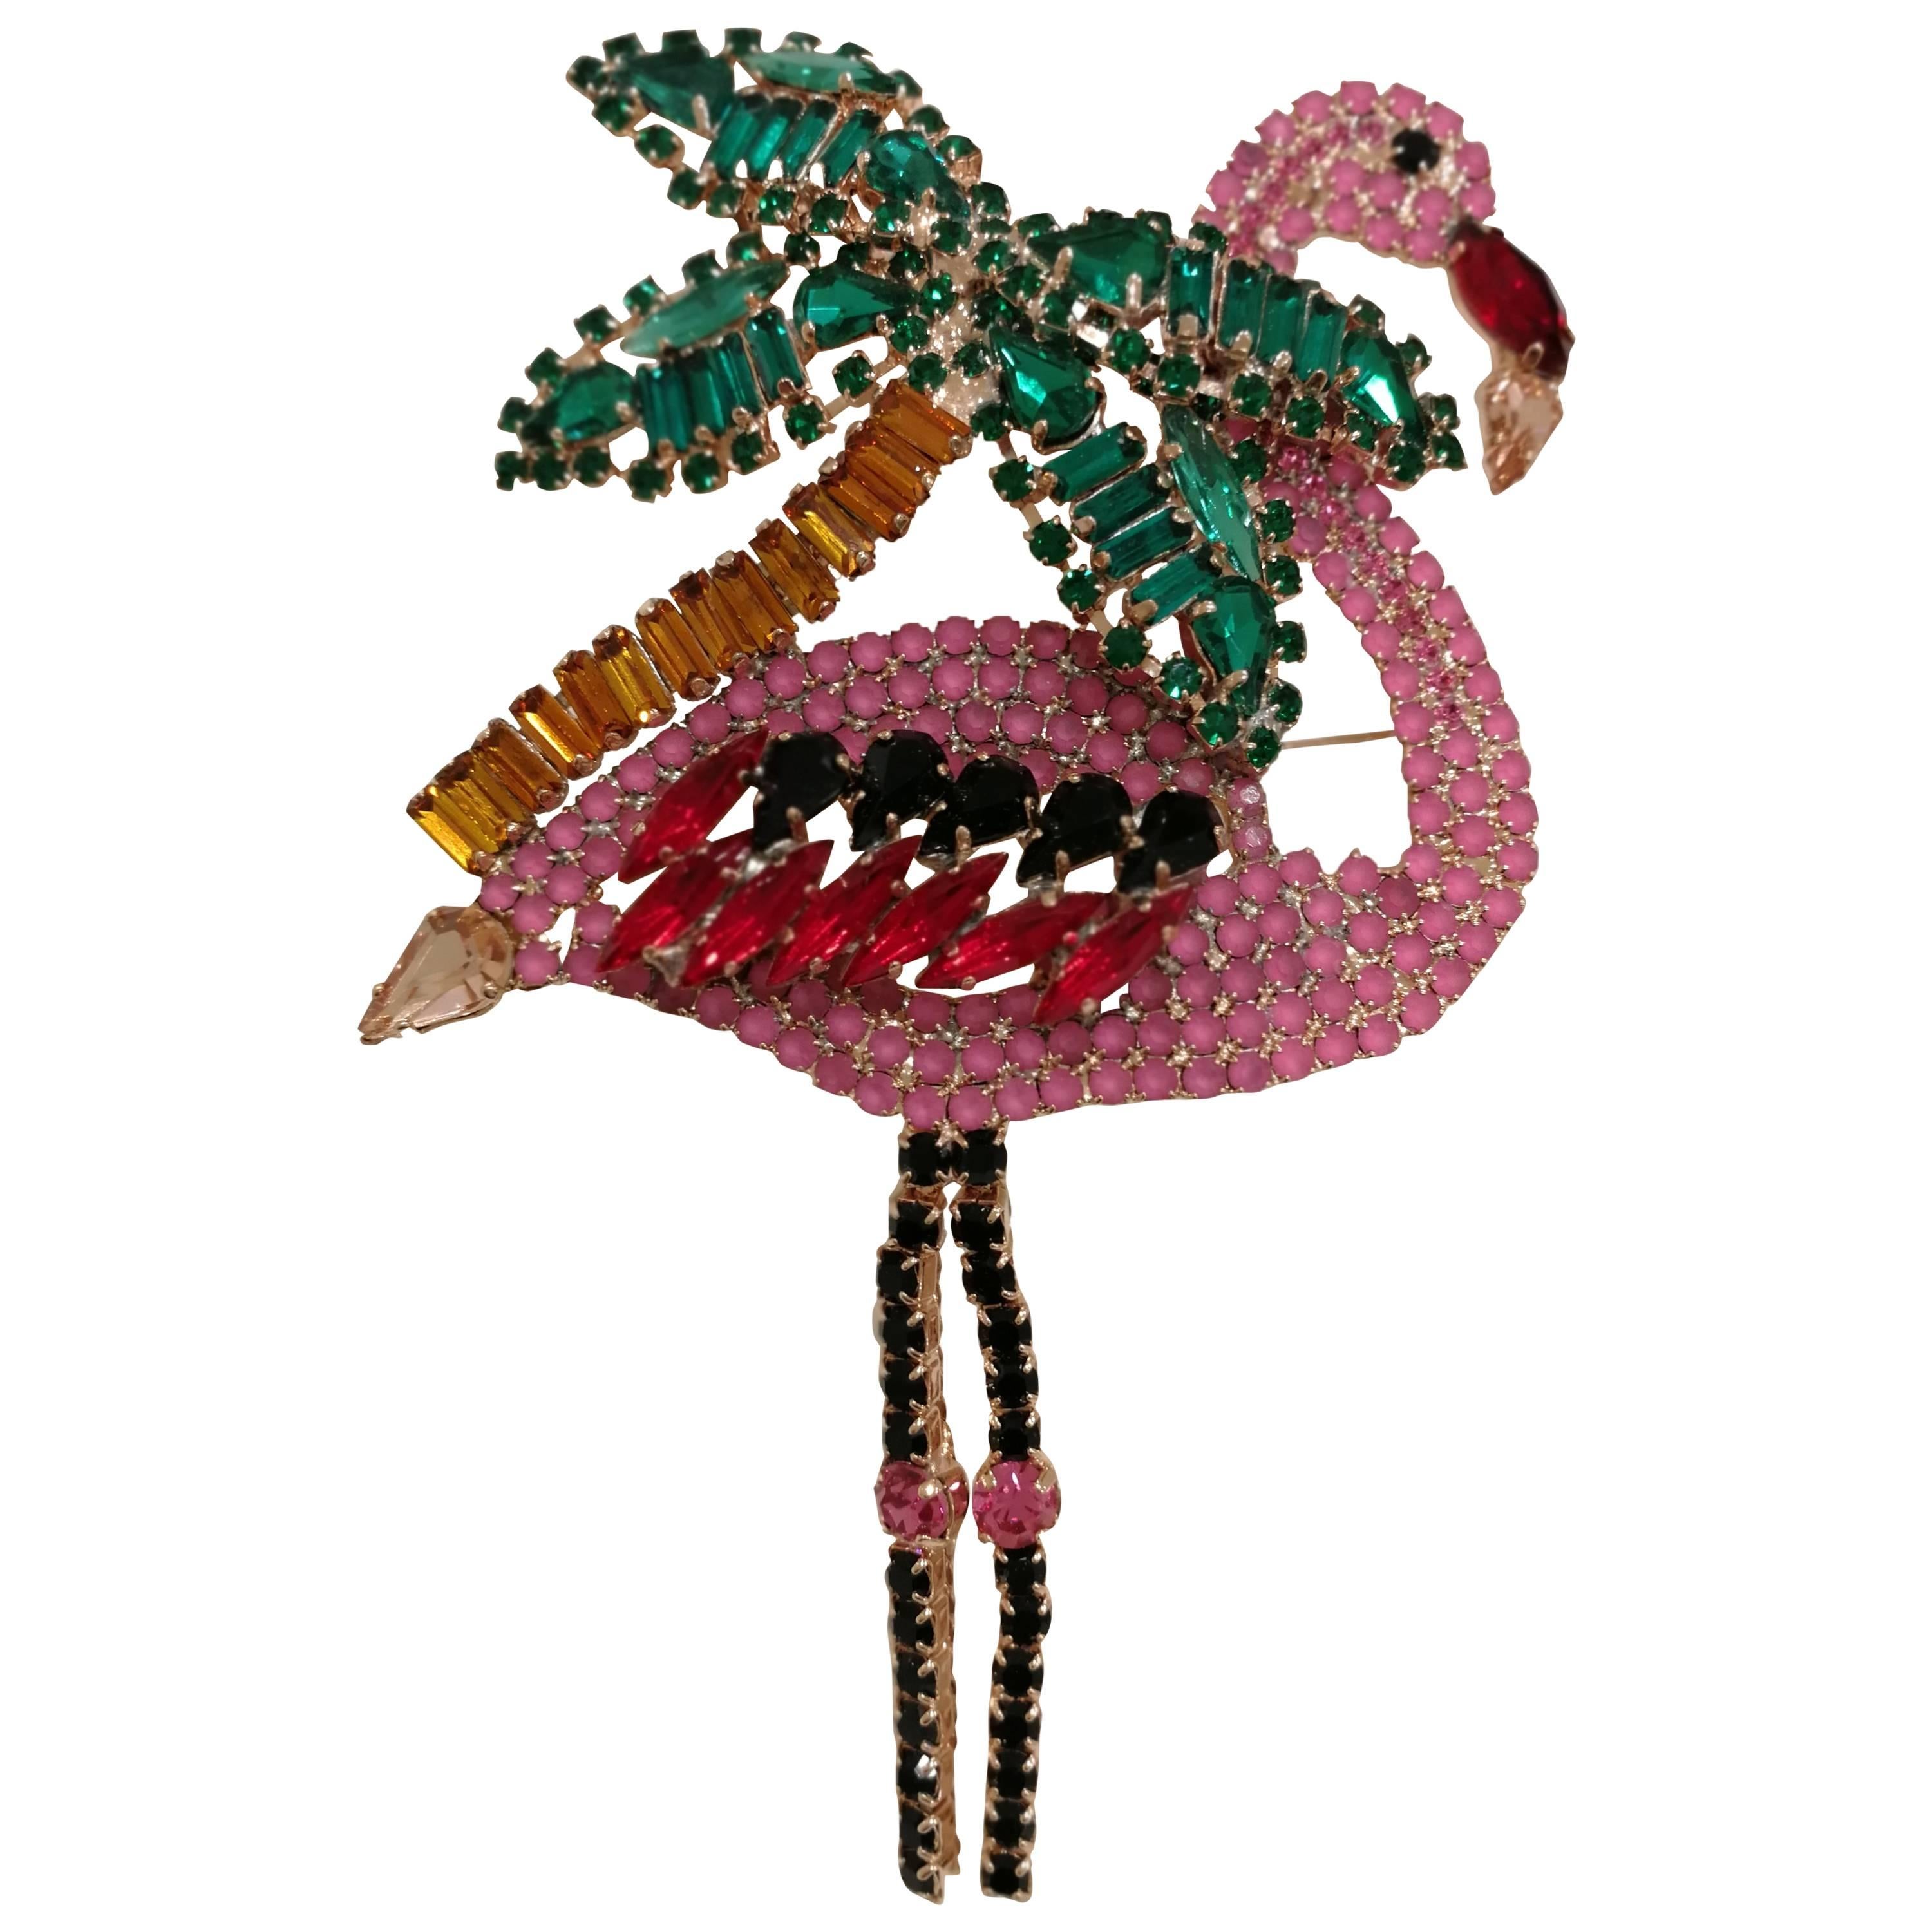 Lisa C. Pink Flamingo Palm Brooch - Pin